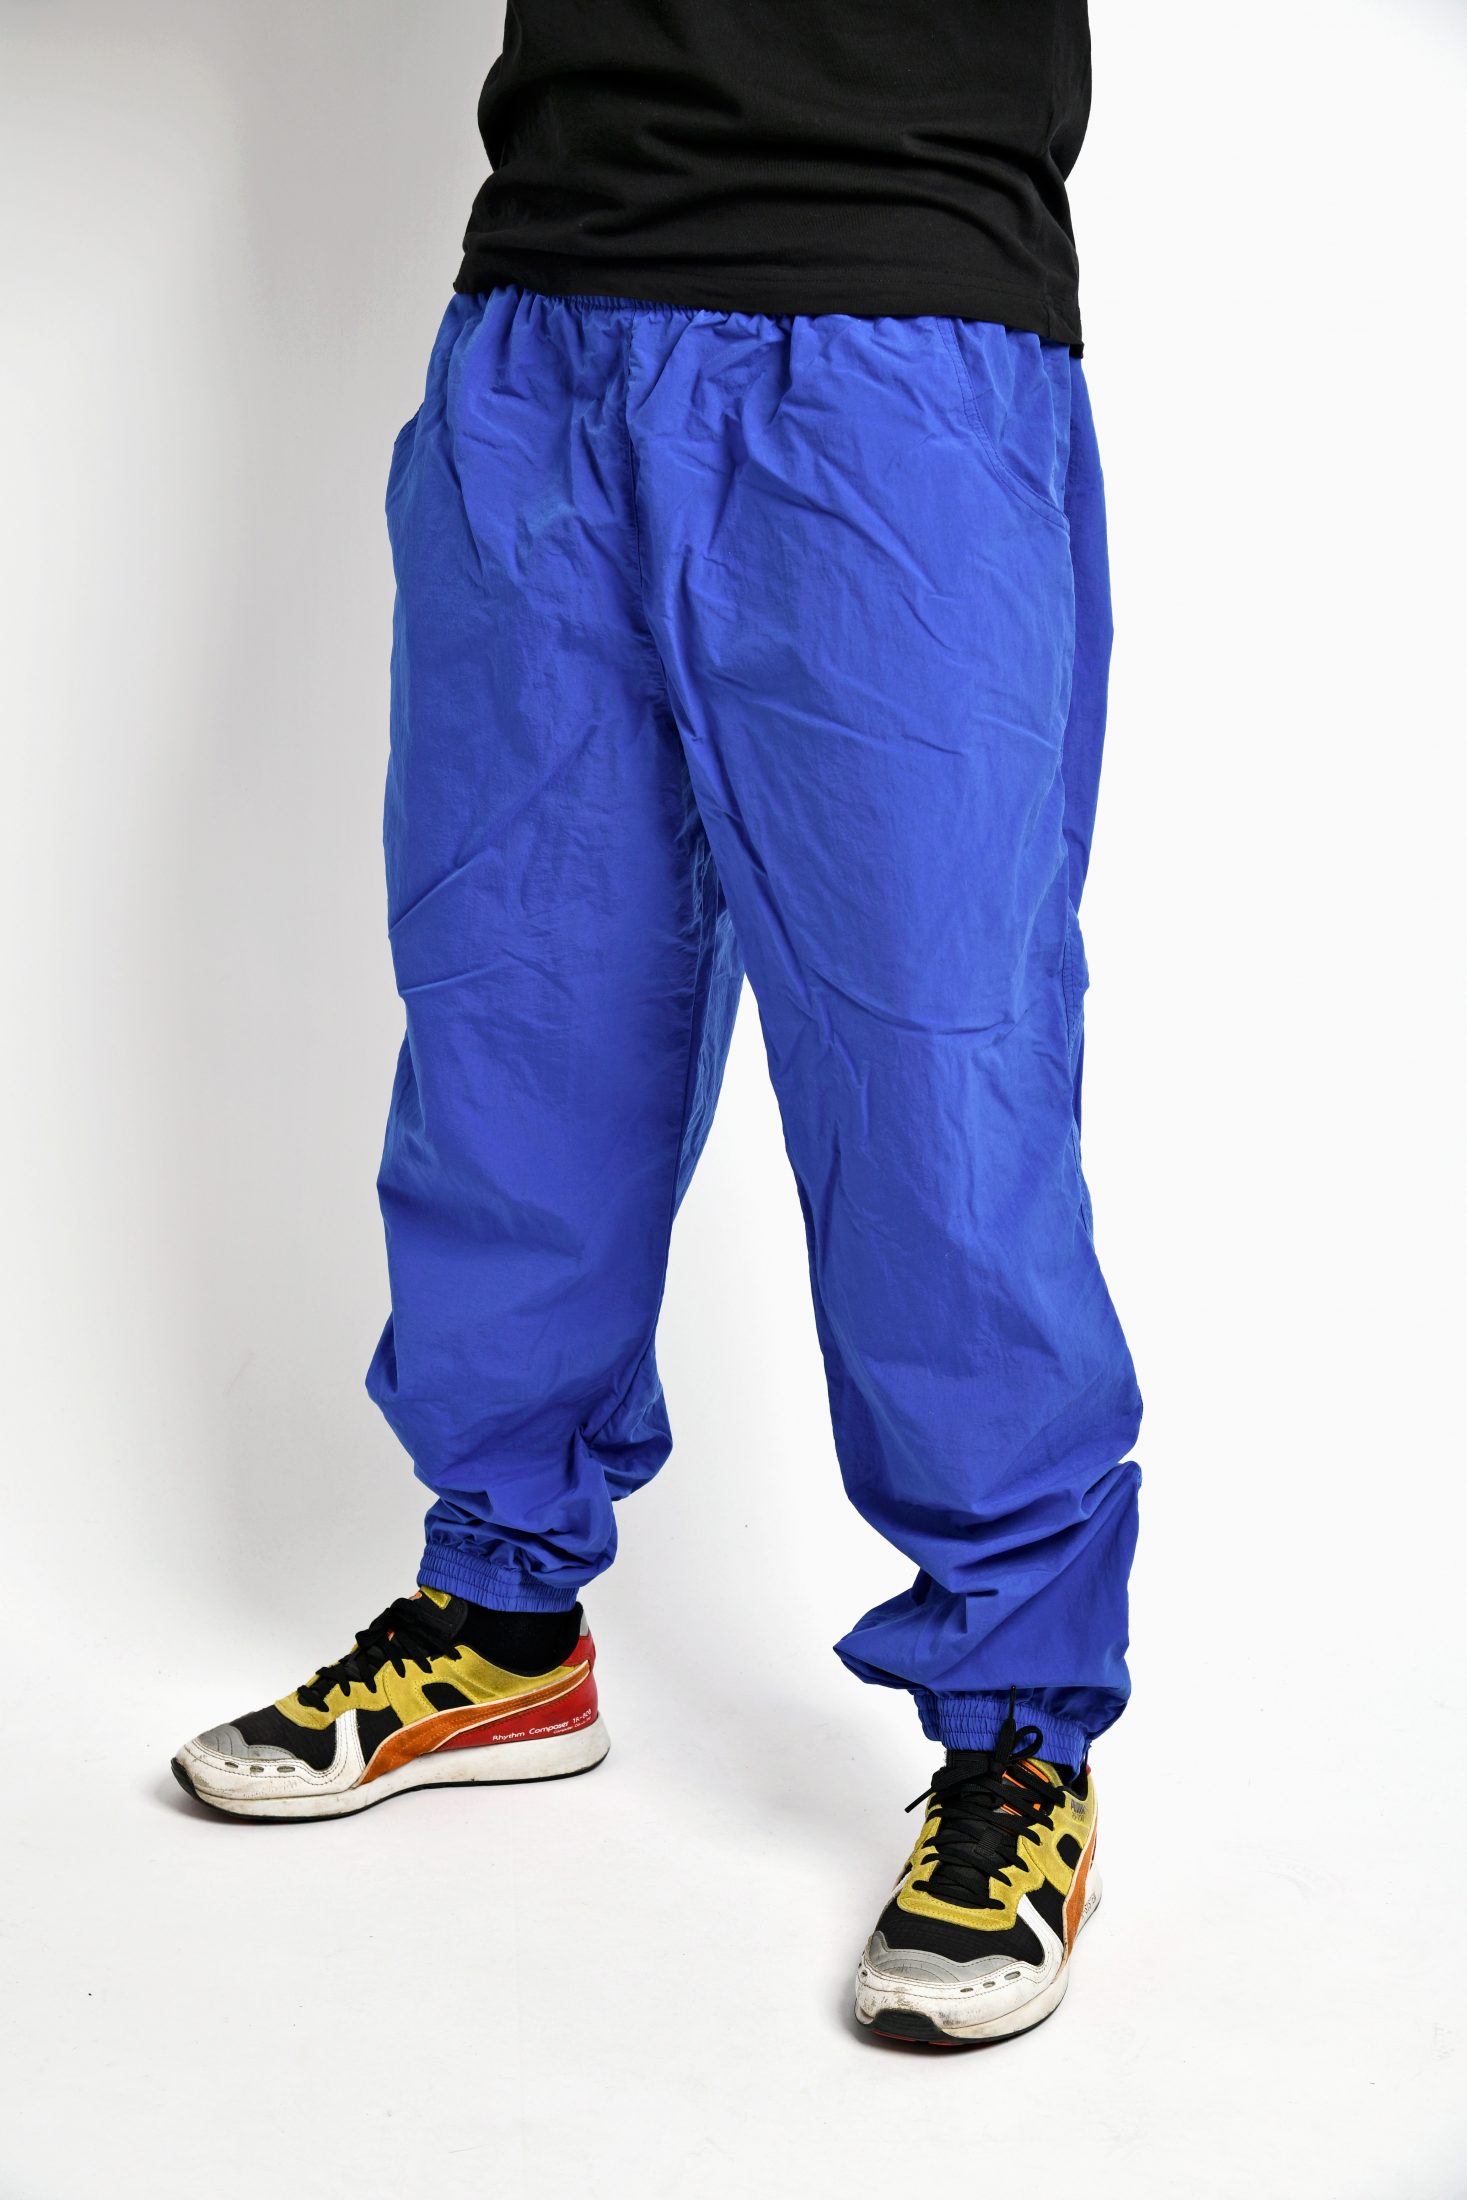 90s blue wind pants | Vintage clothes online for men